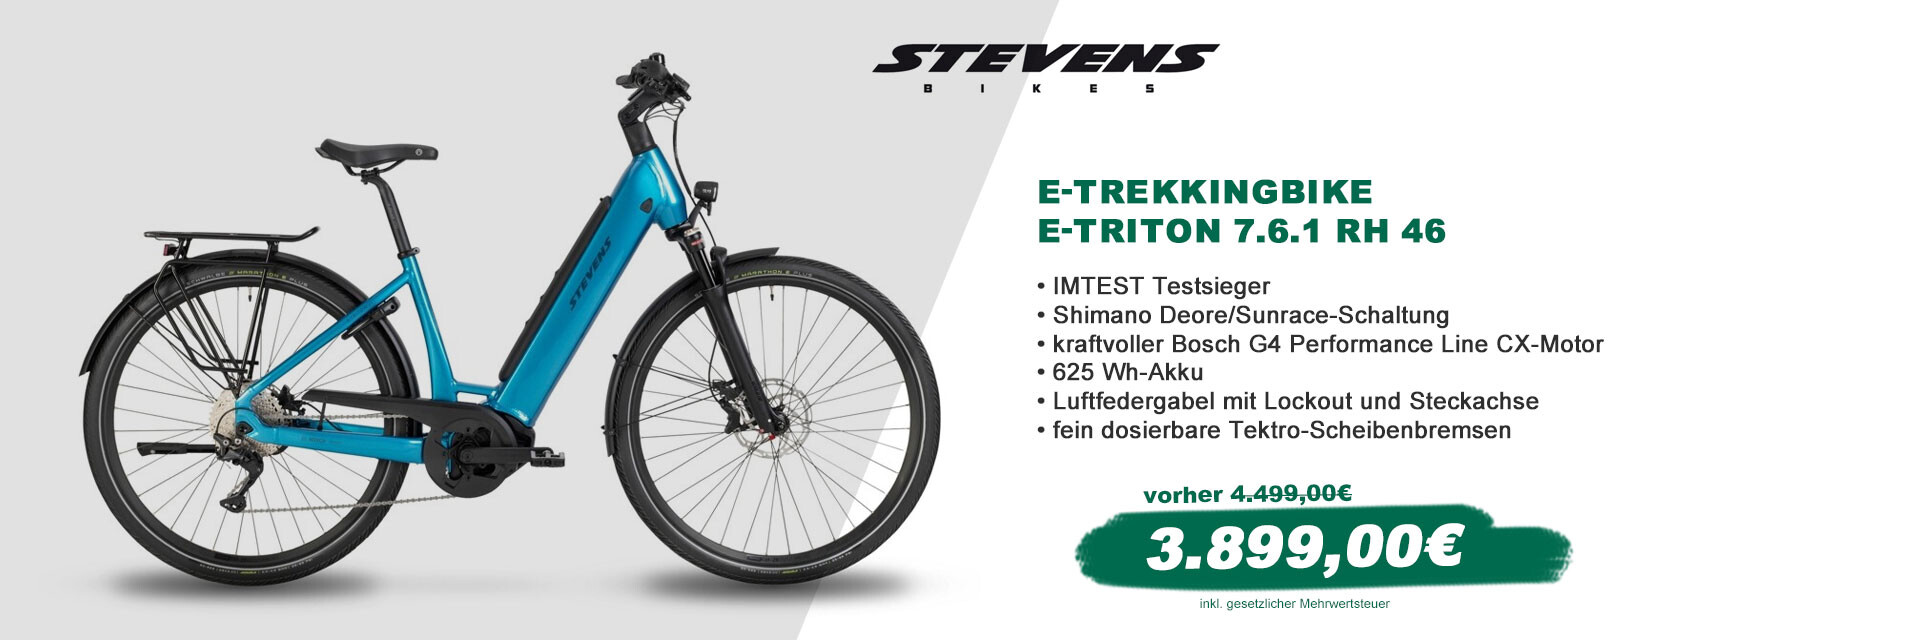 Stevens E-Triton 7.6.1